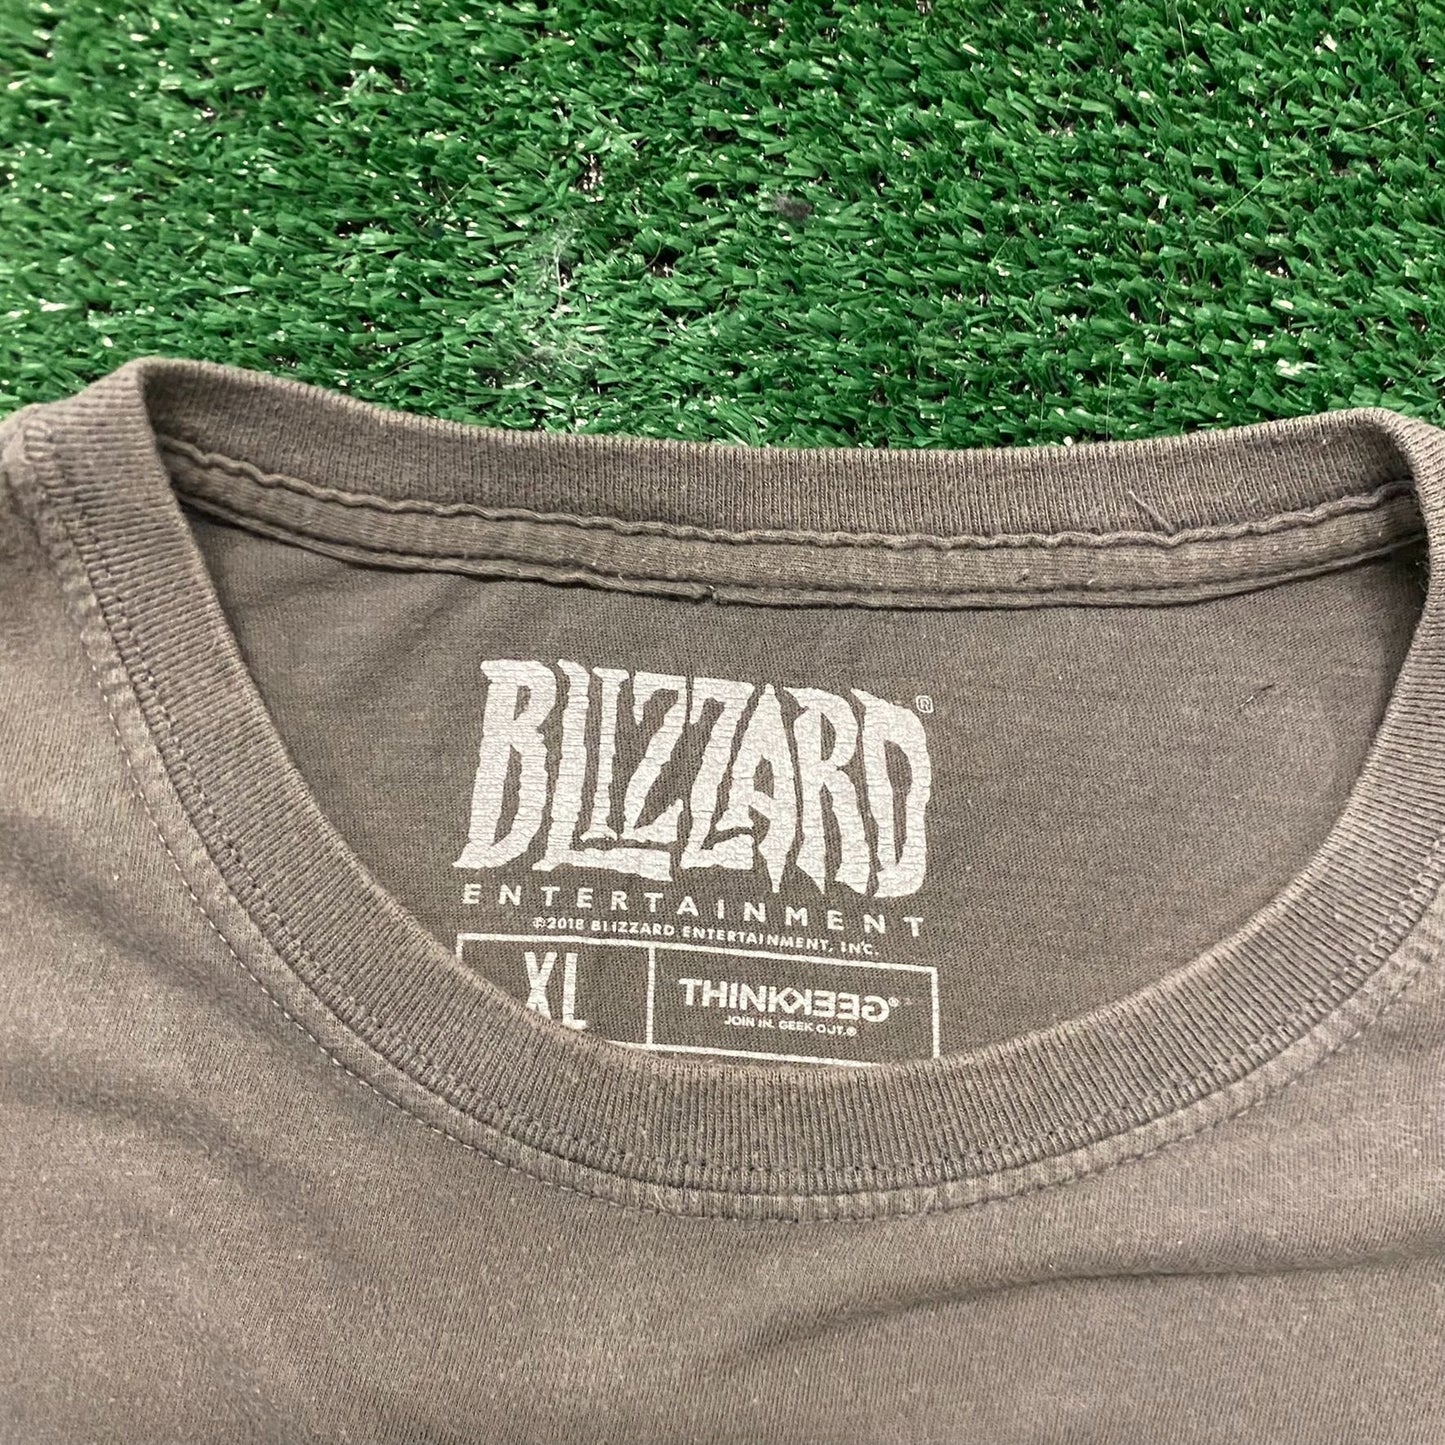 Blizzard Entertainment Overwatch FPS Shooter Gamer T-Shirt